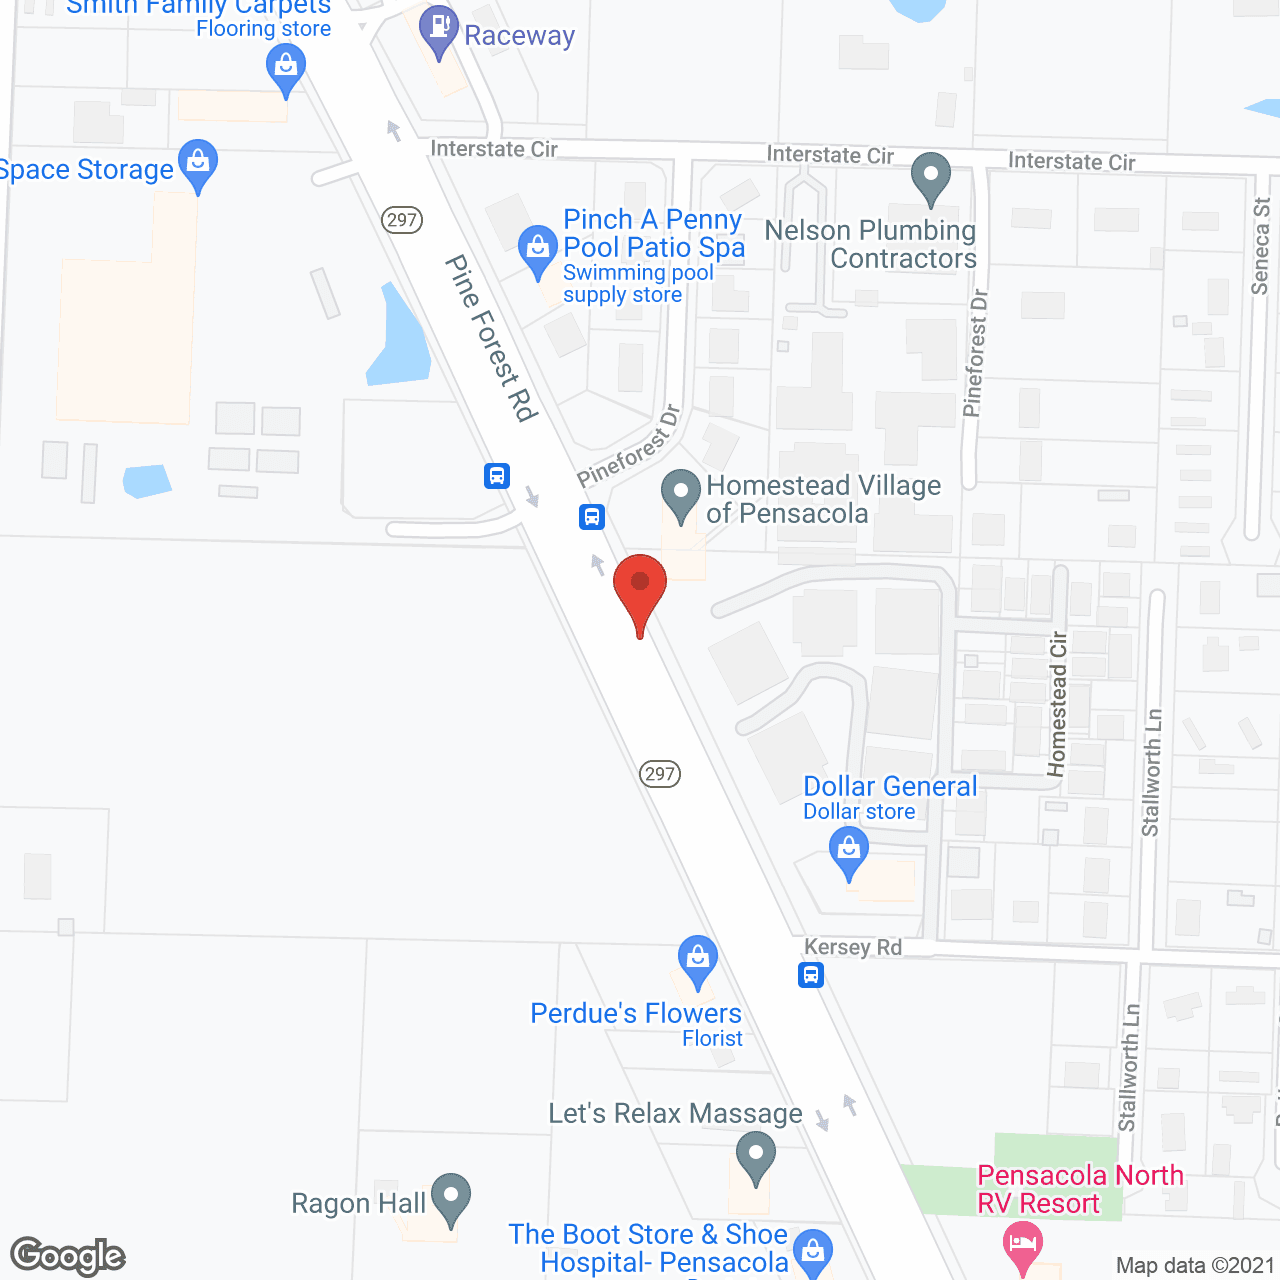 Homestead Village of Pensacola in google map